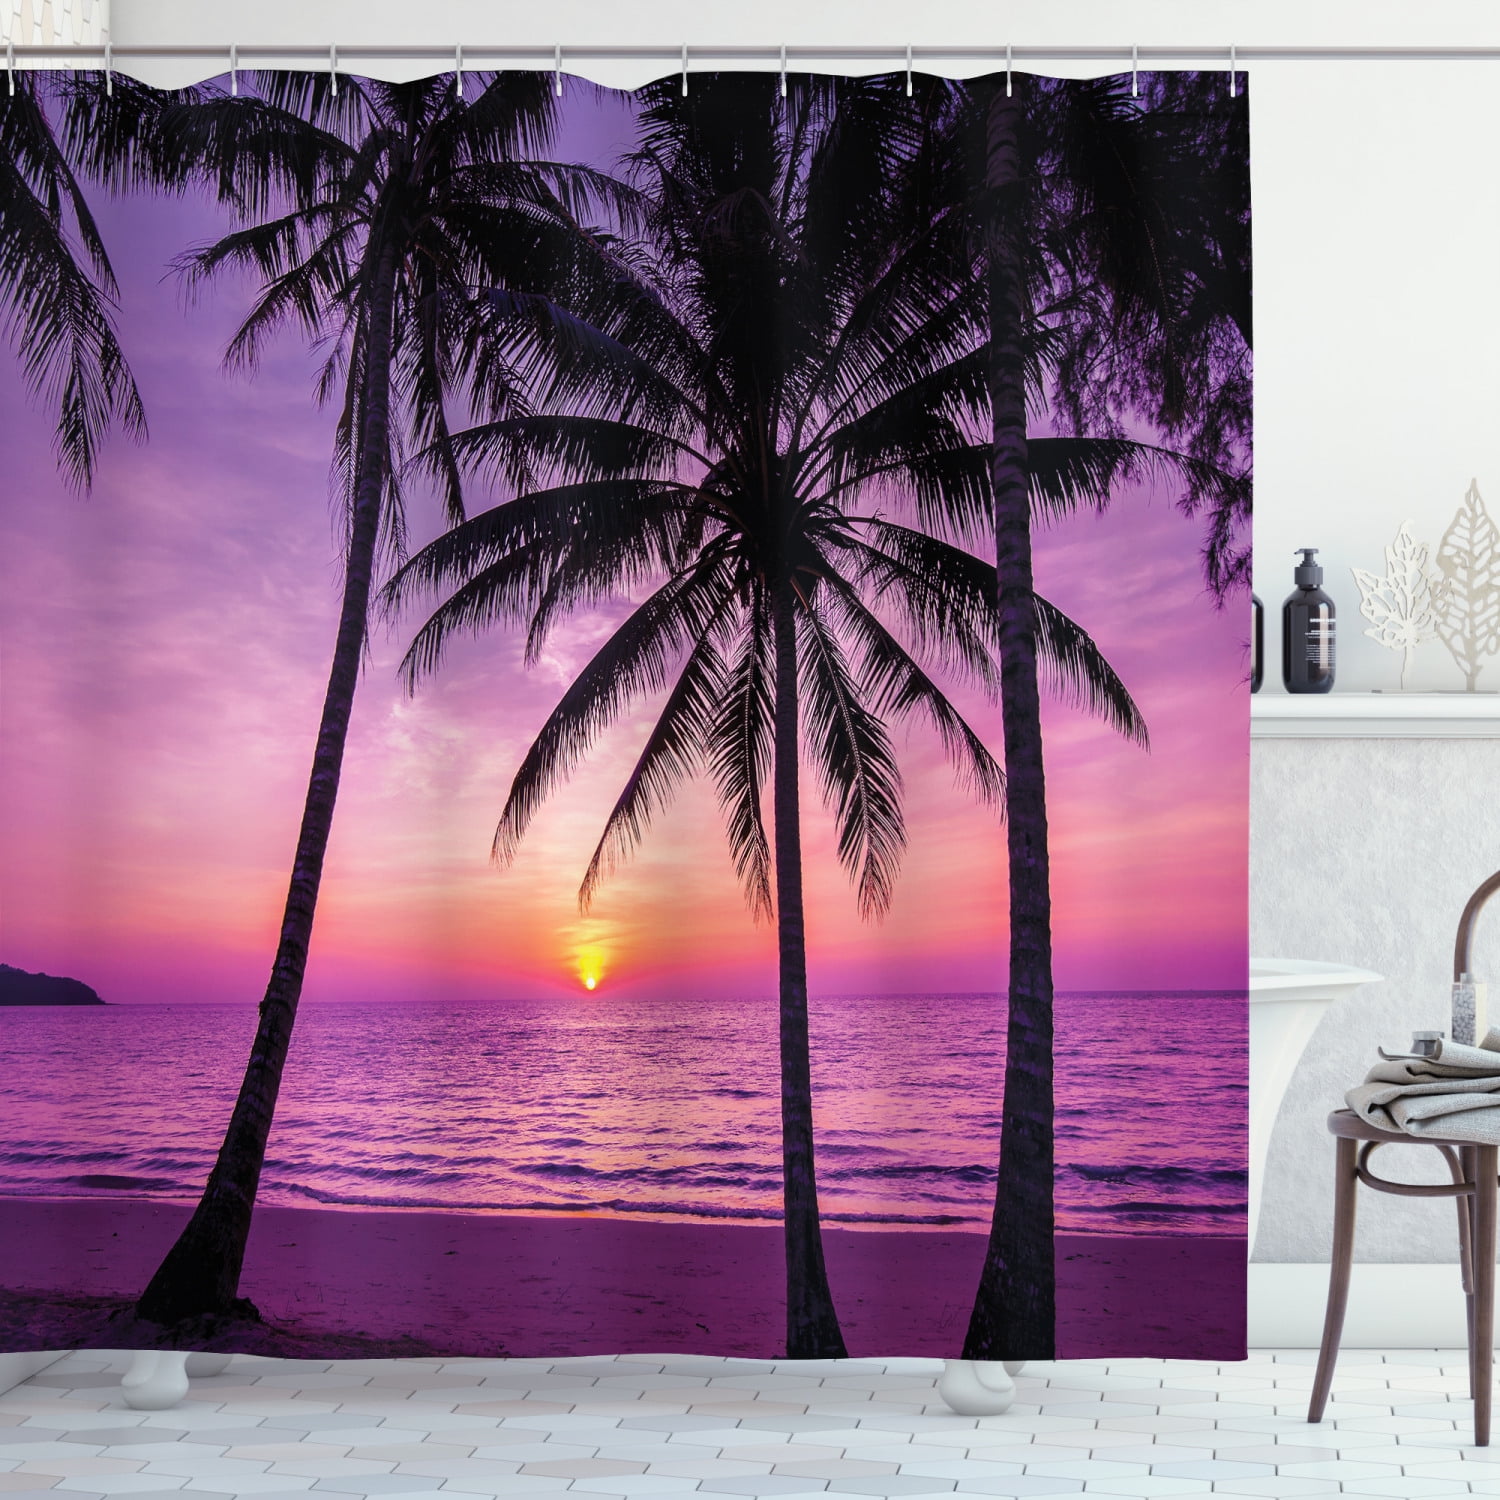 Beautiful Sunset Polyester Curtain Liner Waterproof Bathroom Fabric 12 Hook Mats 